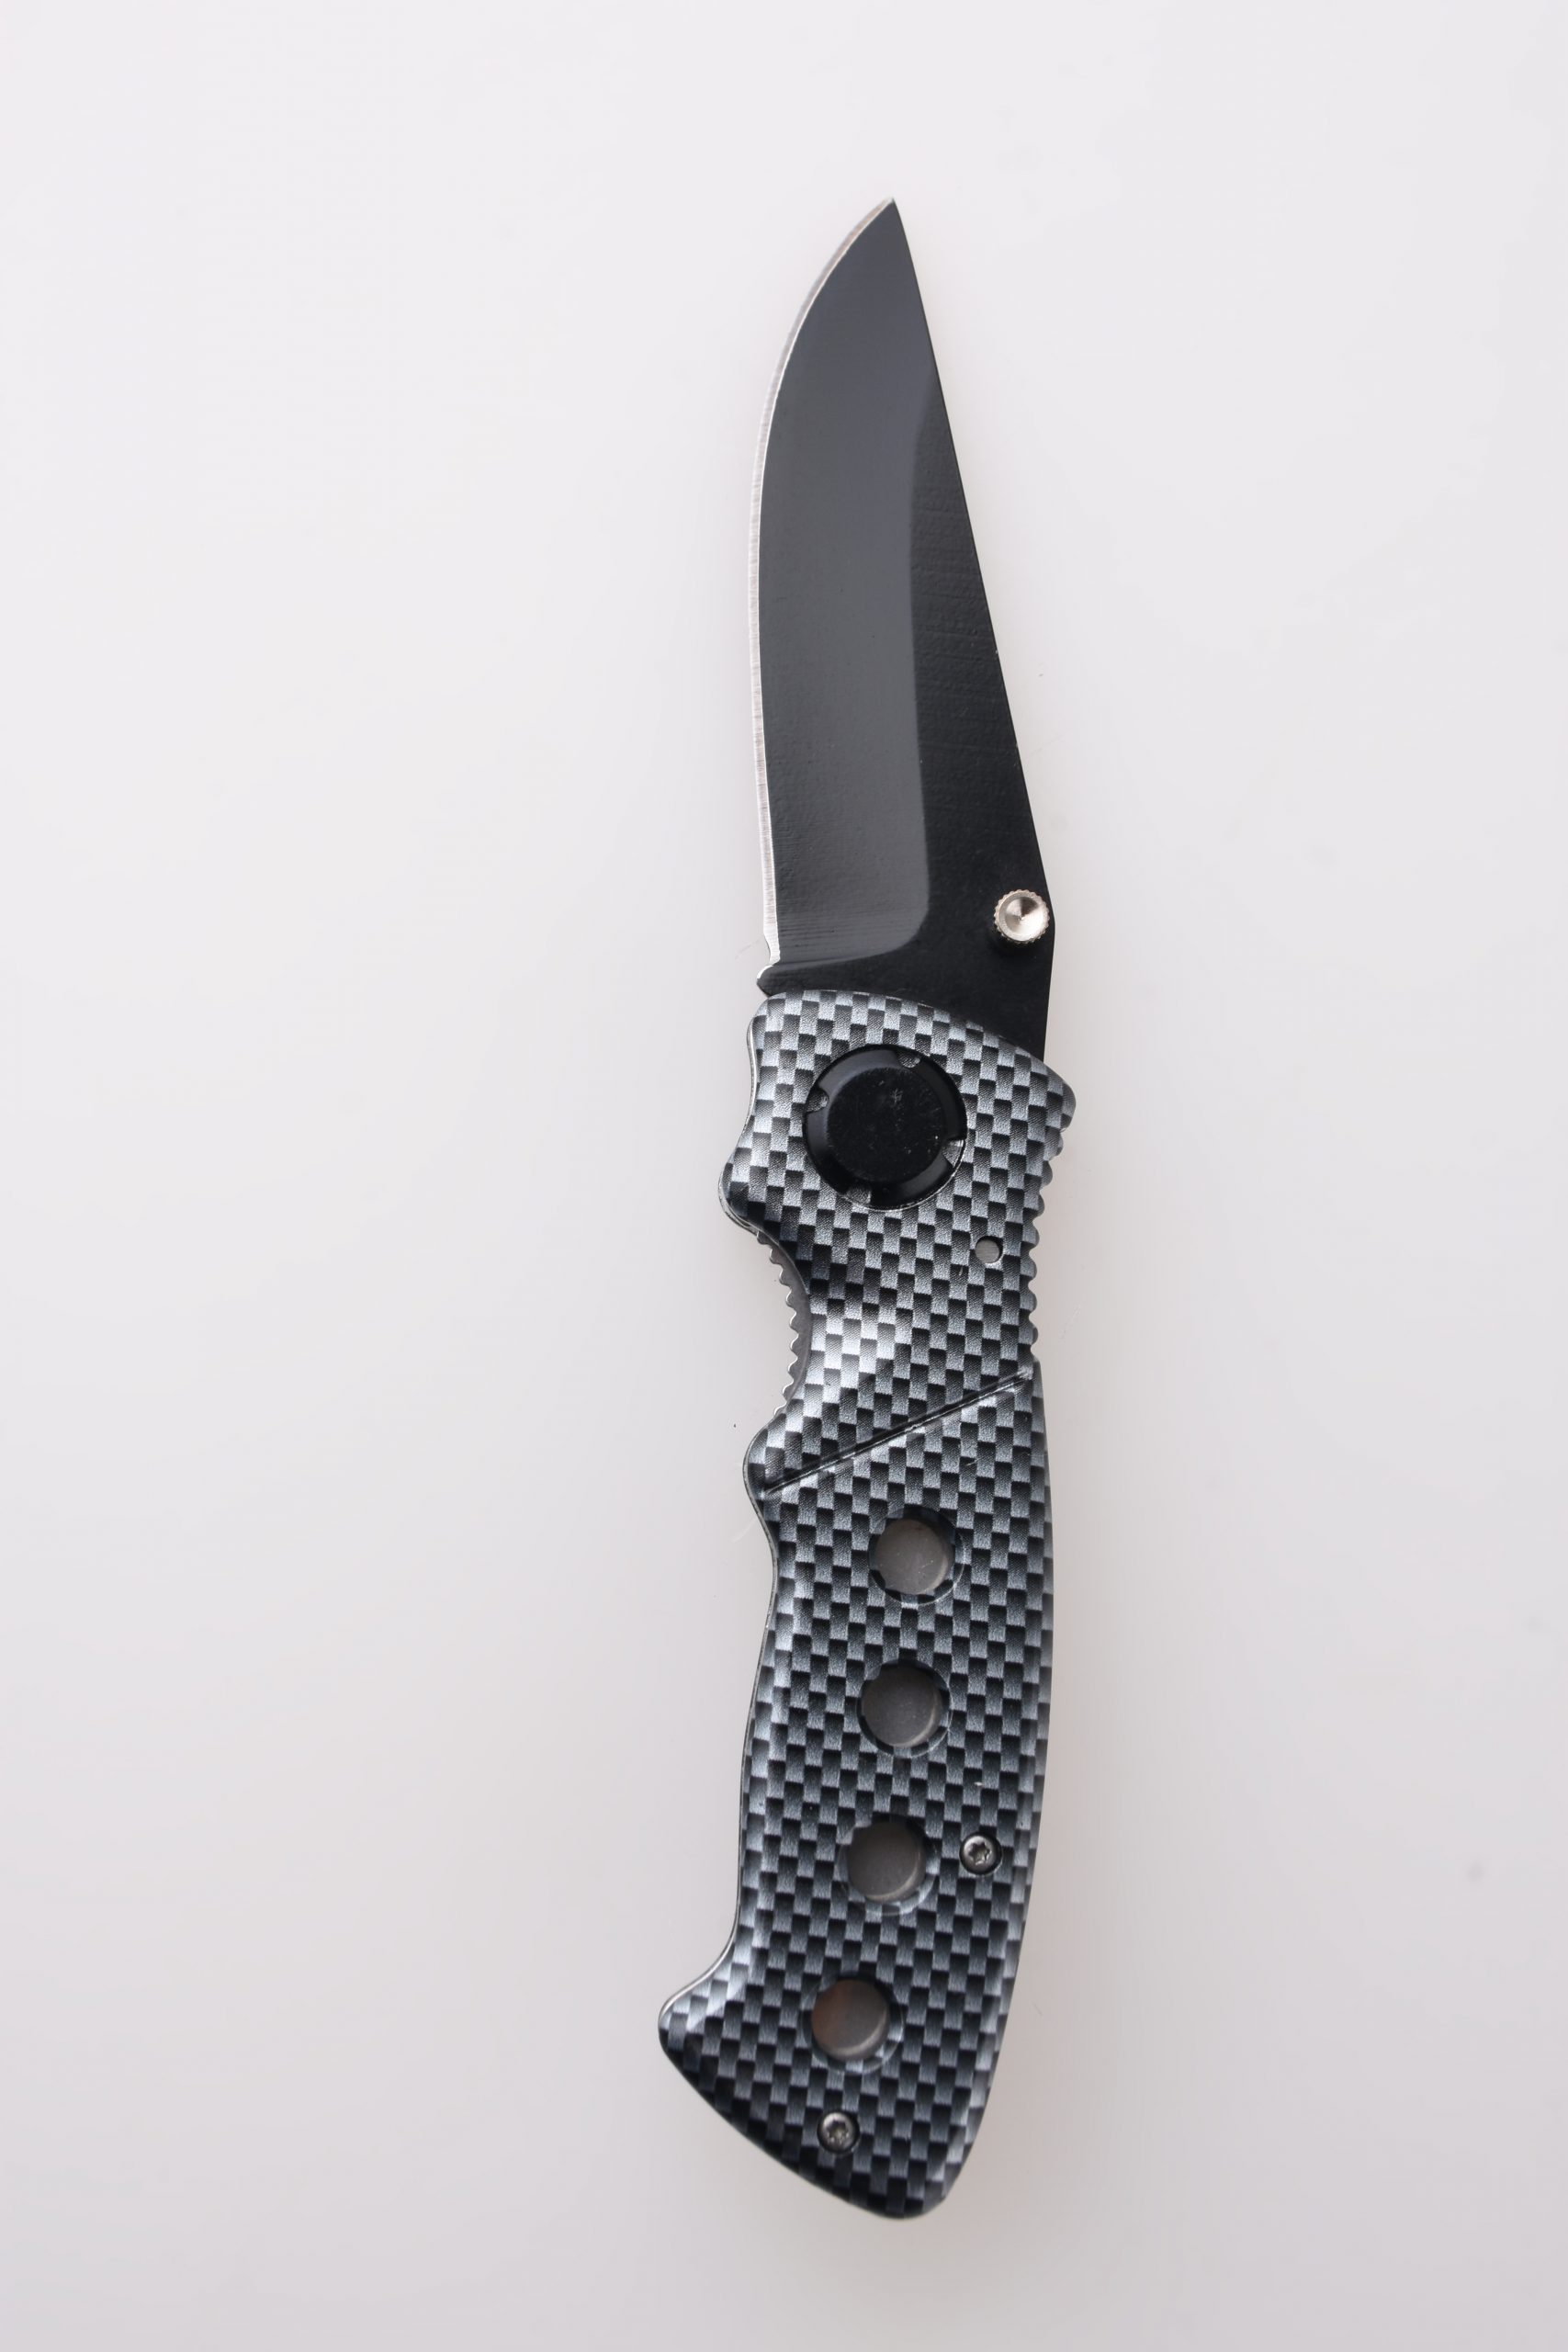 OEM Folding knife blackened blade camouflage cladding handle thumb stud open JLD-YJ109